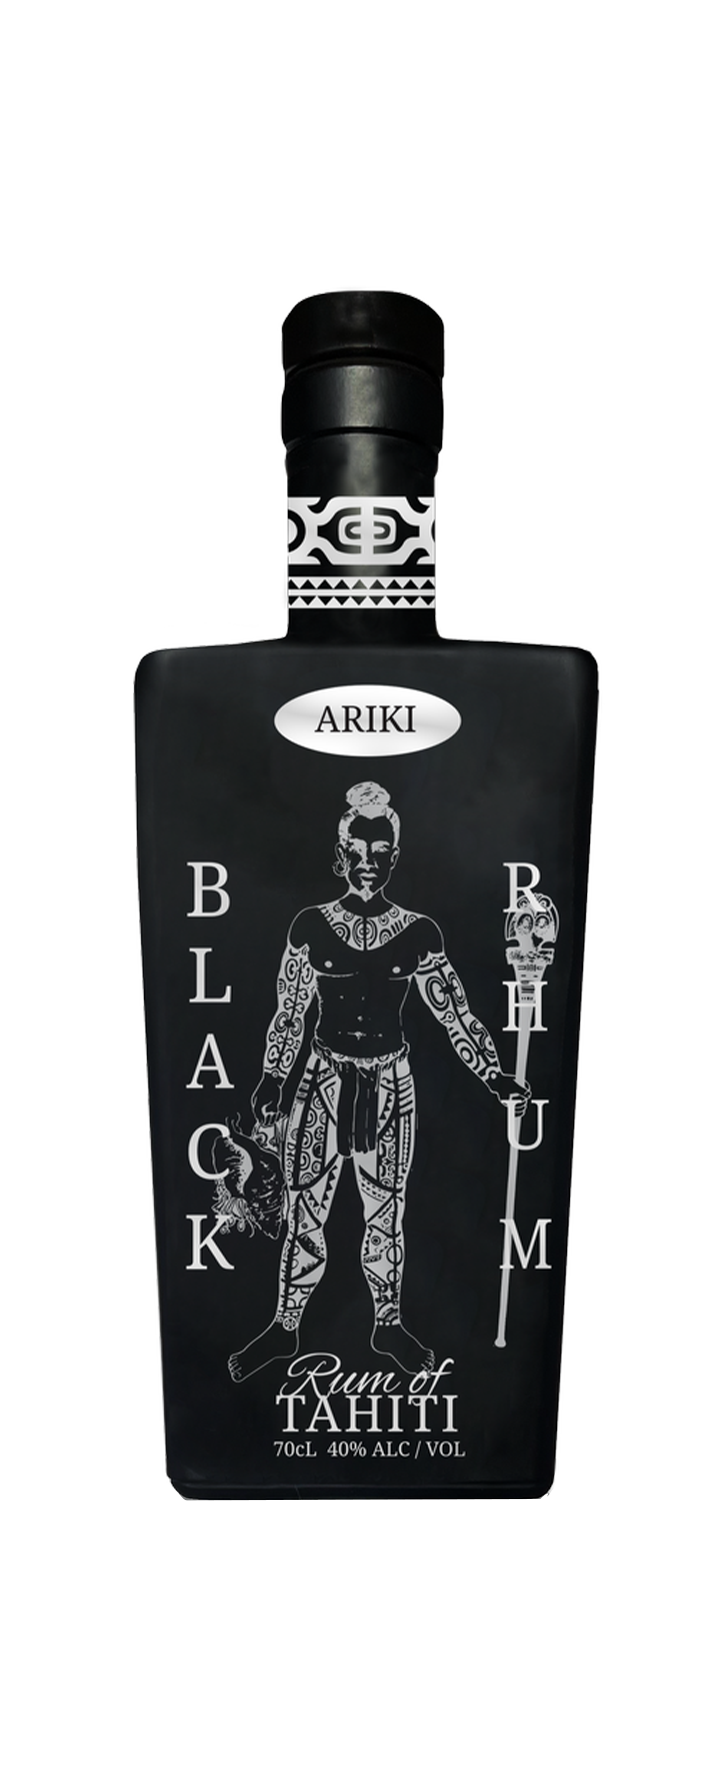 Ariki Black Rum of Tahiti 700ml x6 Bottles 40% ALC/VOL.